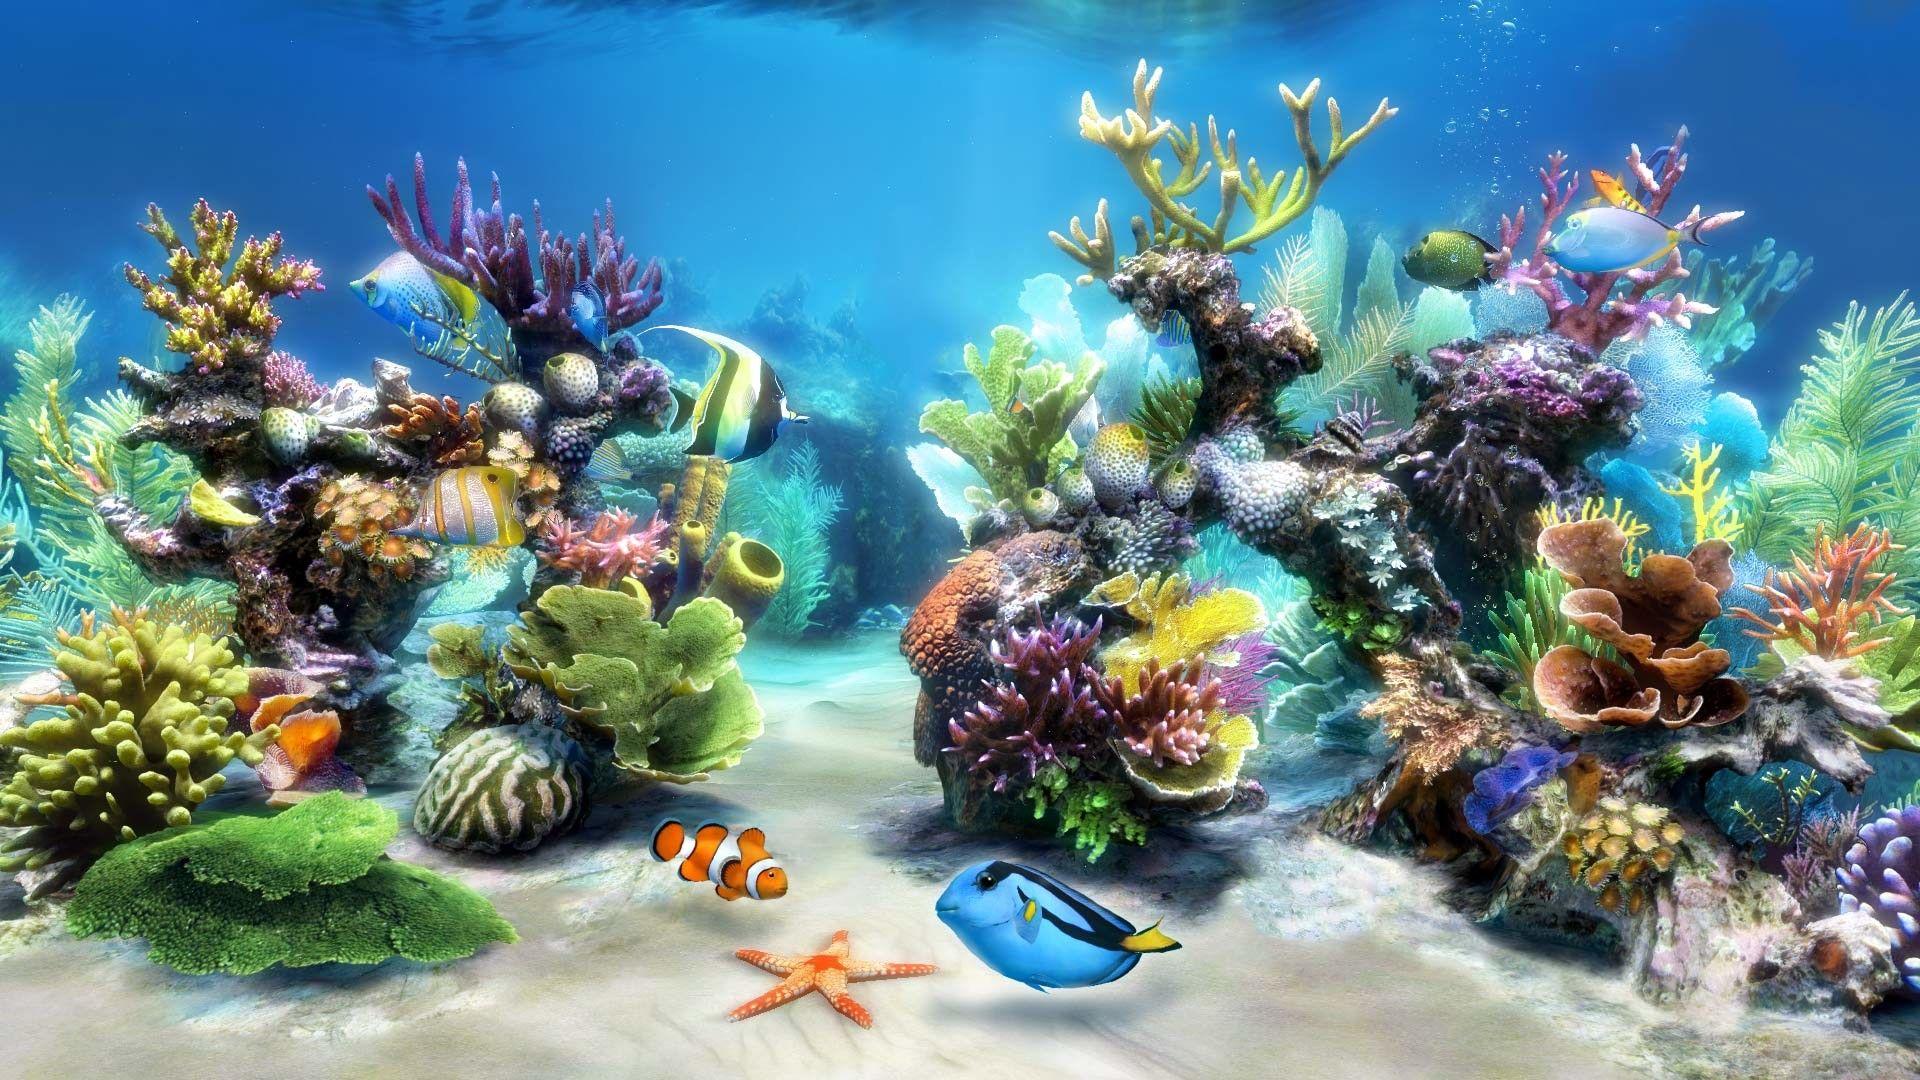 Download Aquarium wallpapers for mobile phone free Aquarium HD pictures